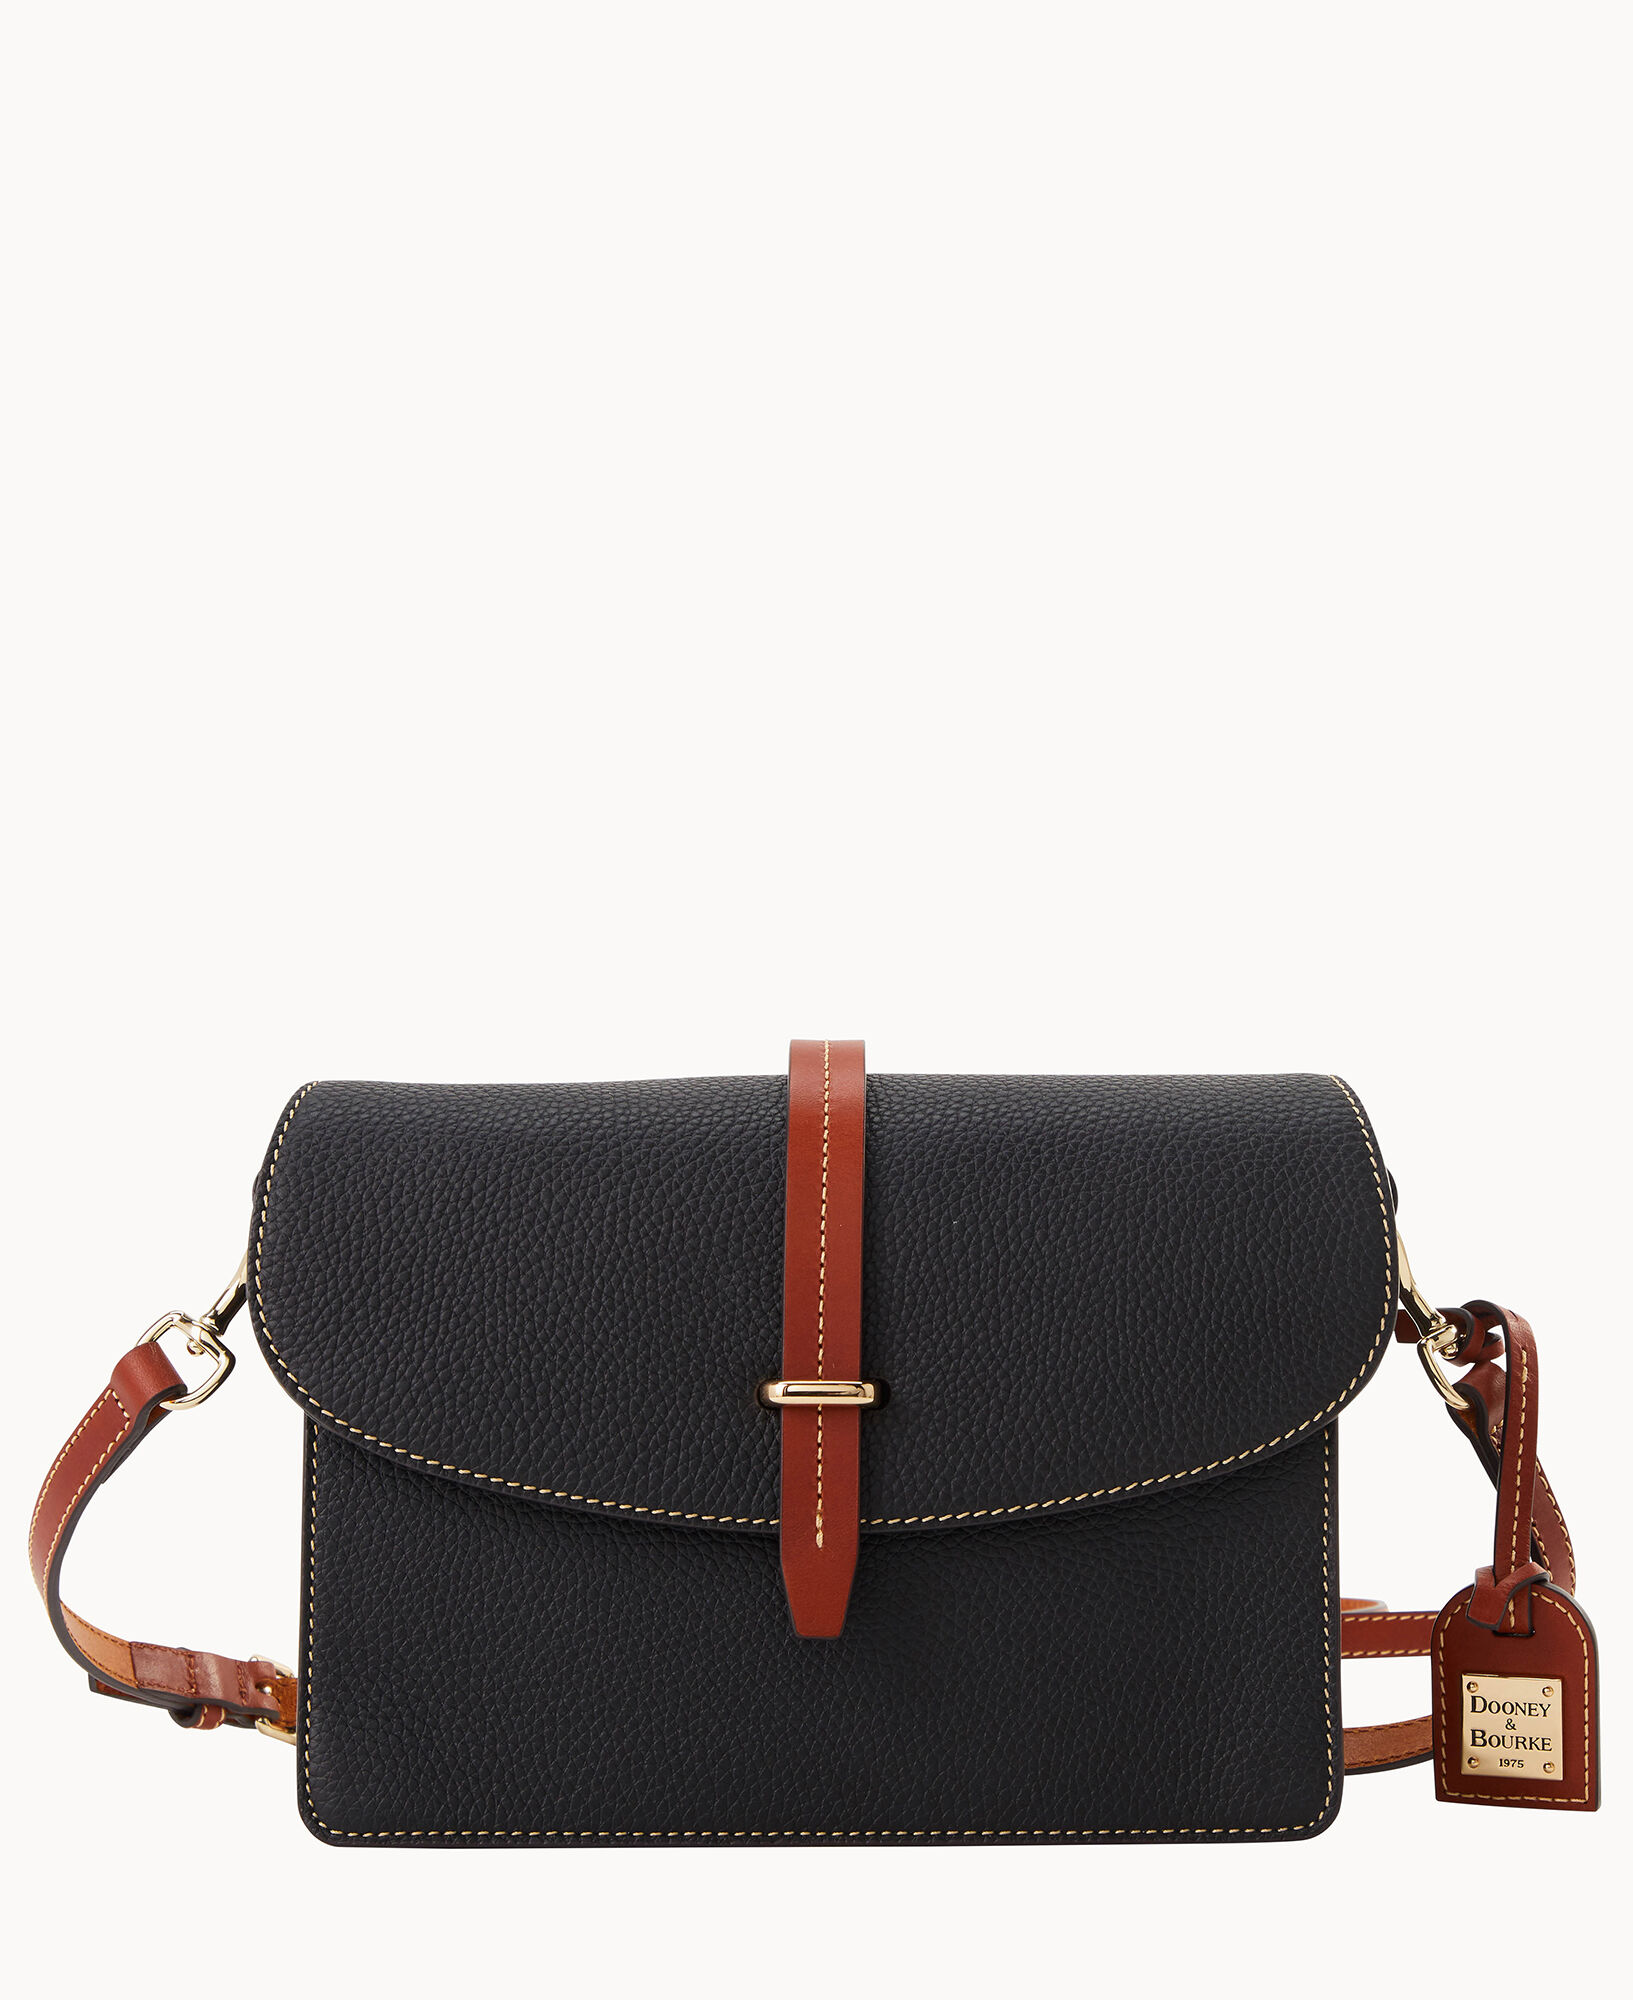 Dooney & Bourke Handbag, Pebble Grain Crossbody 25 - Black: Handbags